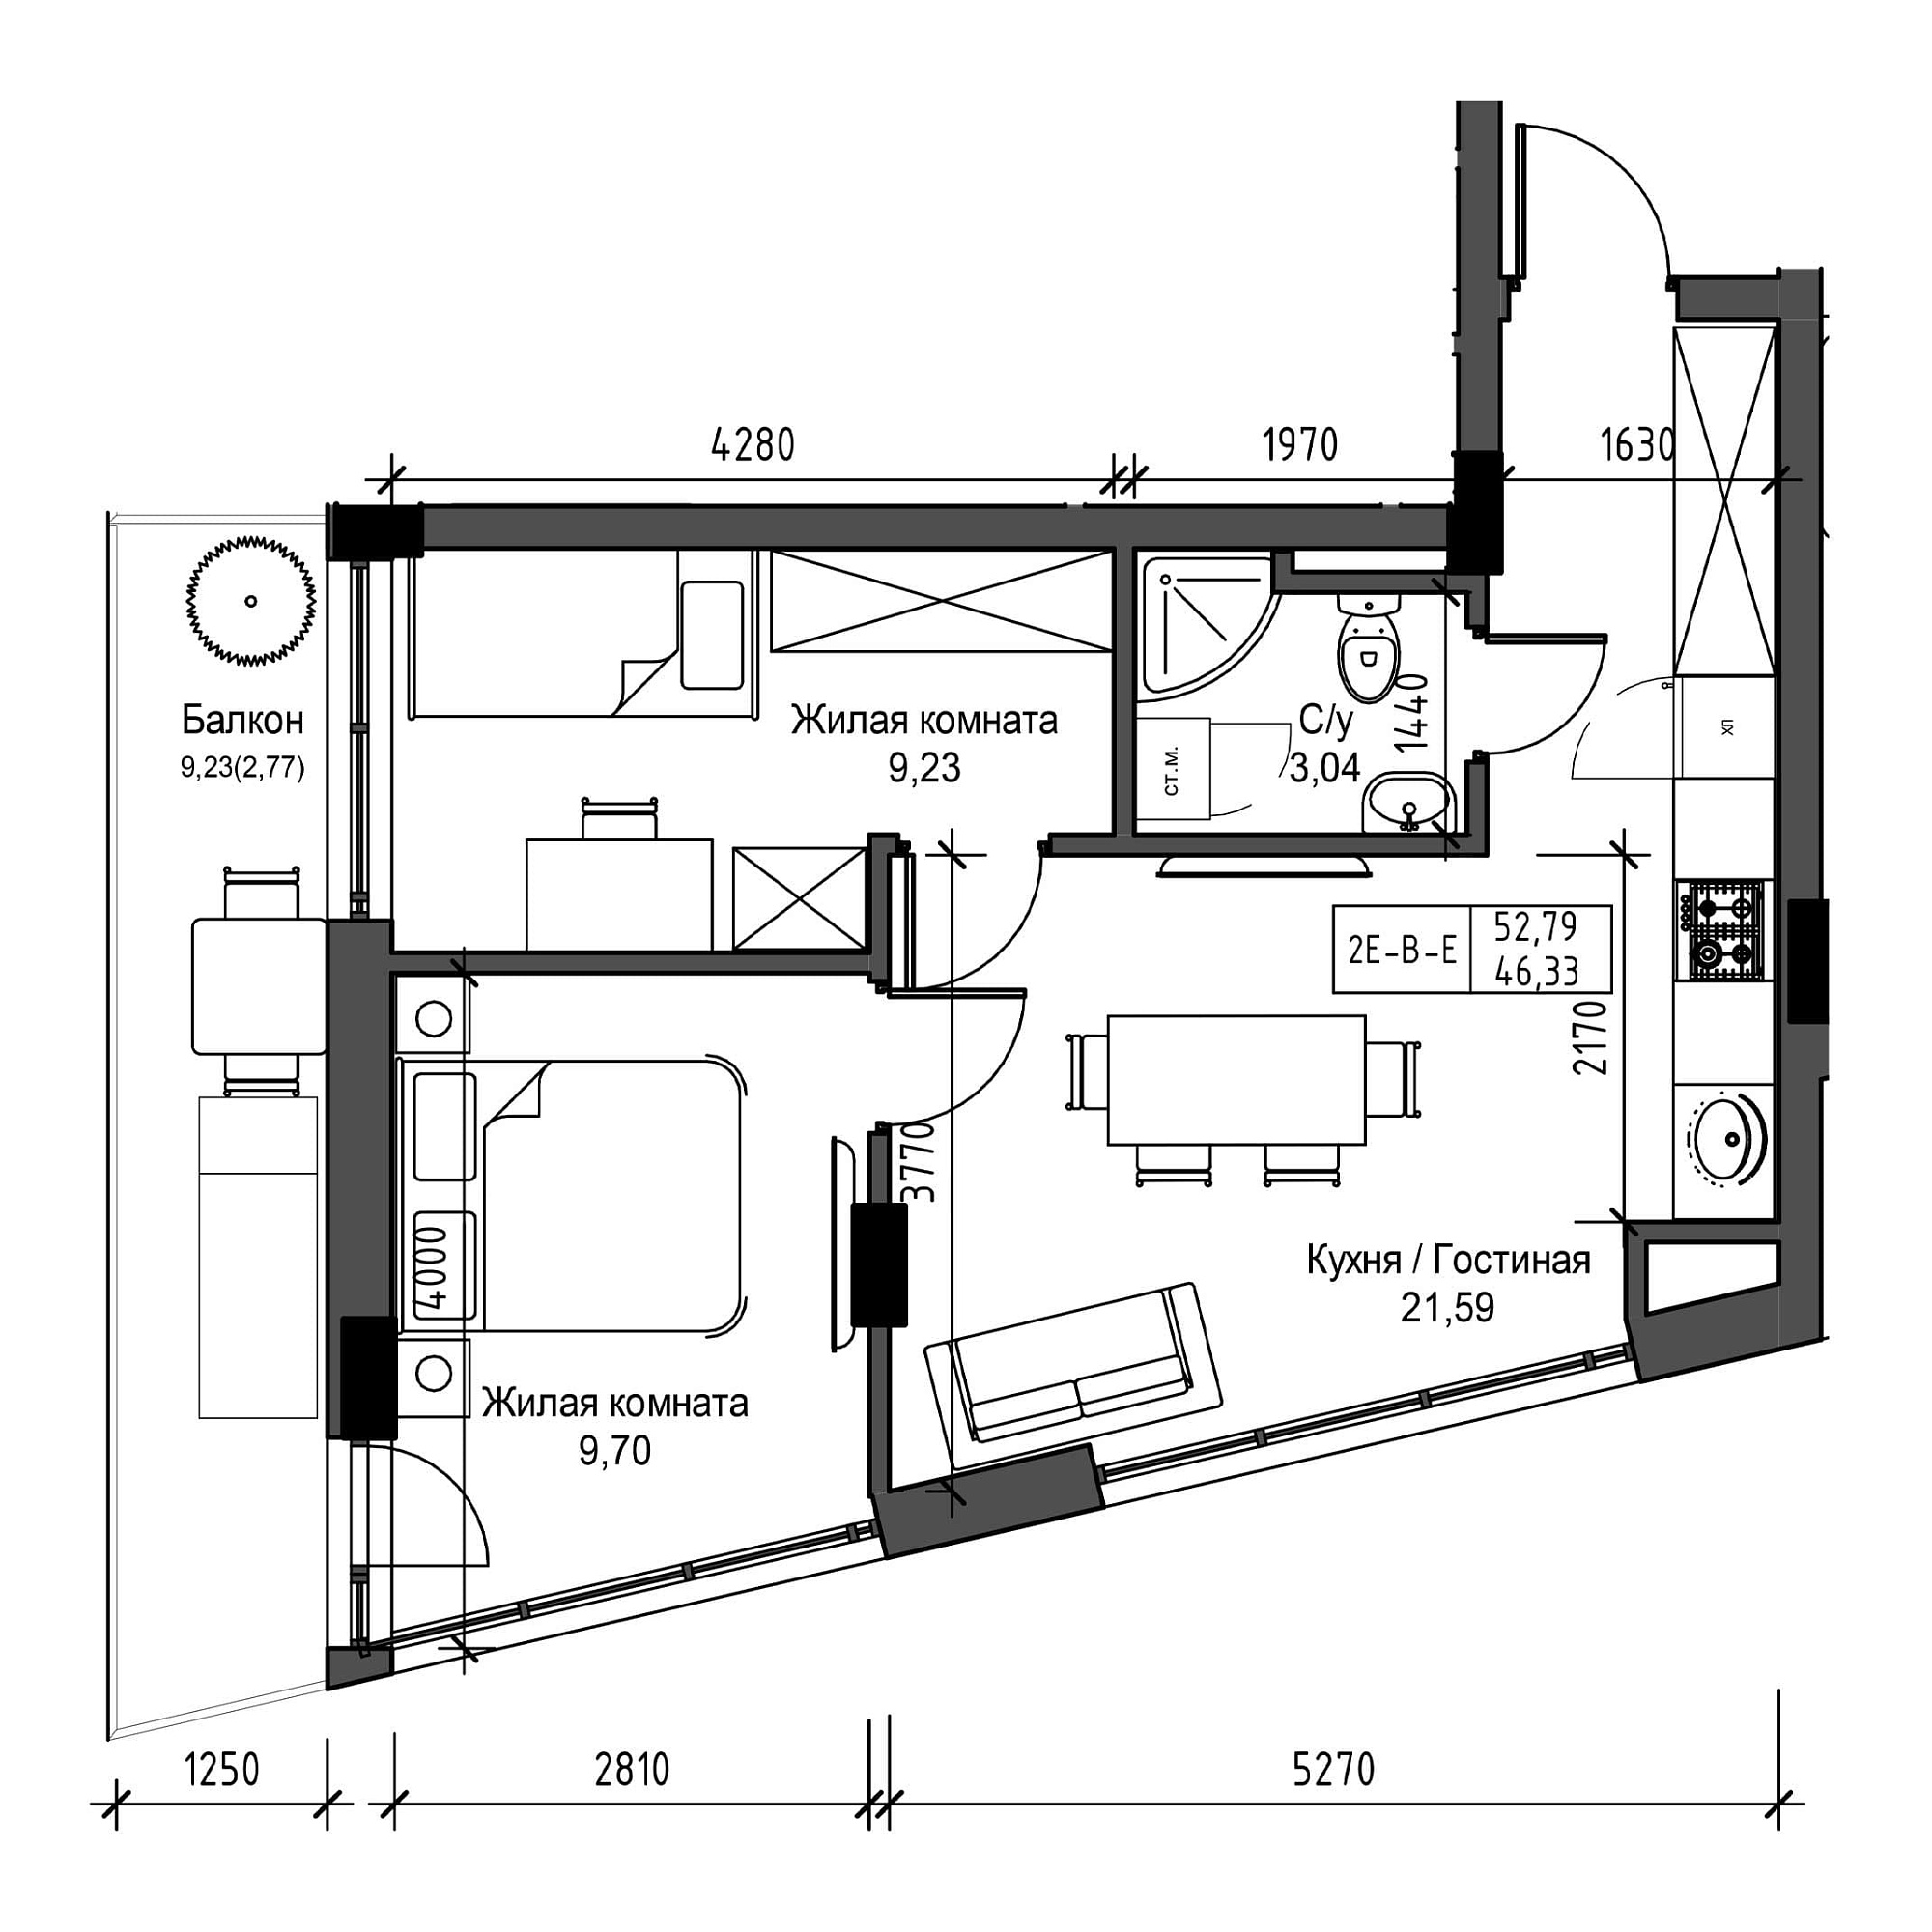 Planning 2-rm flats area 46.33m2, UM-001-07/0009.